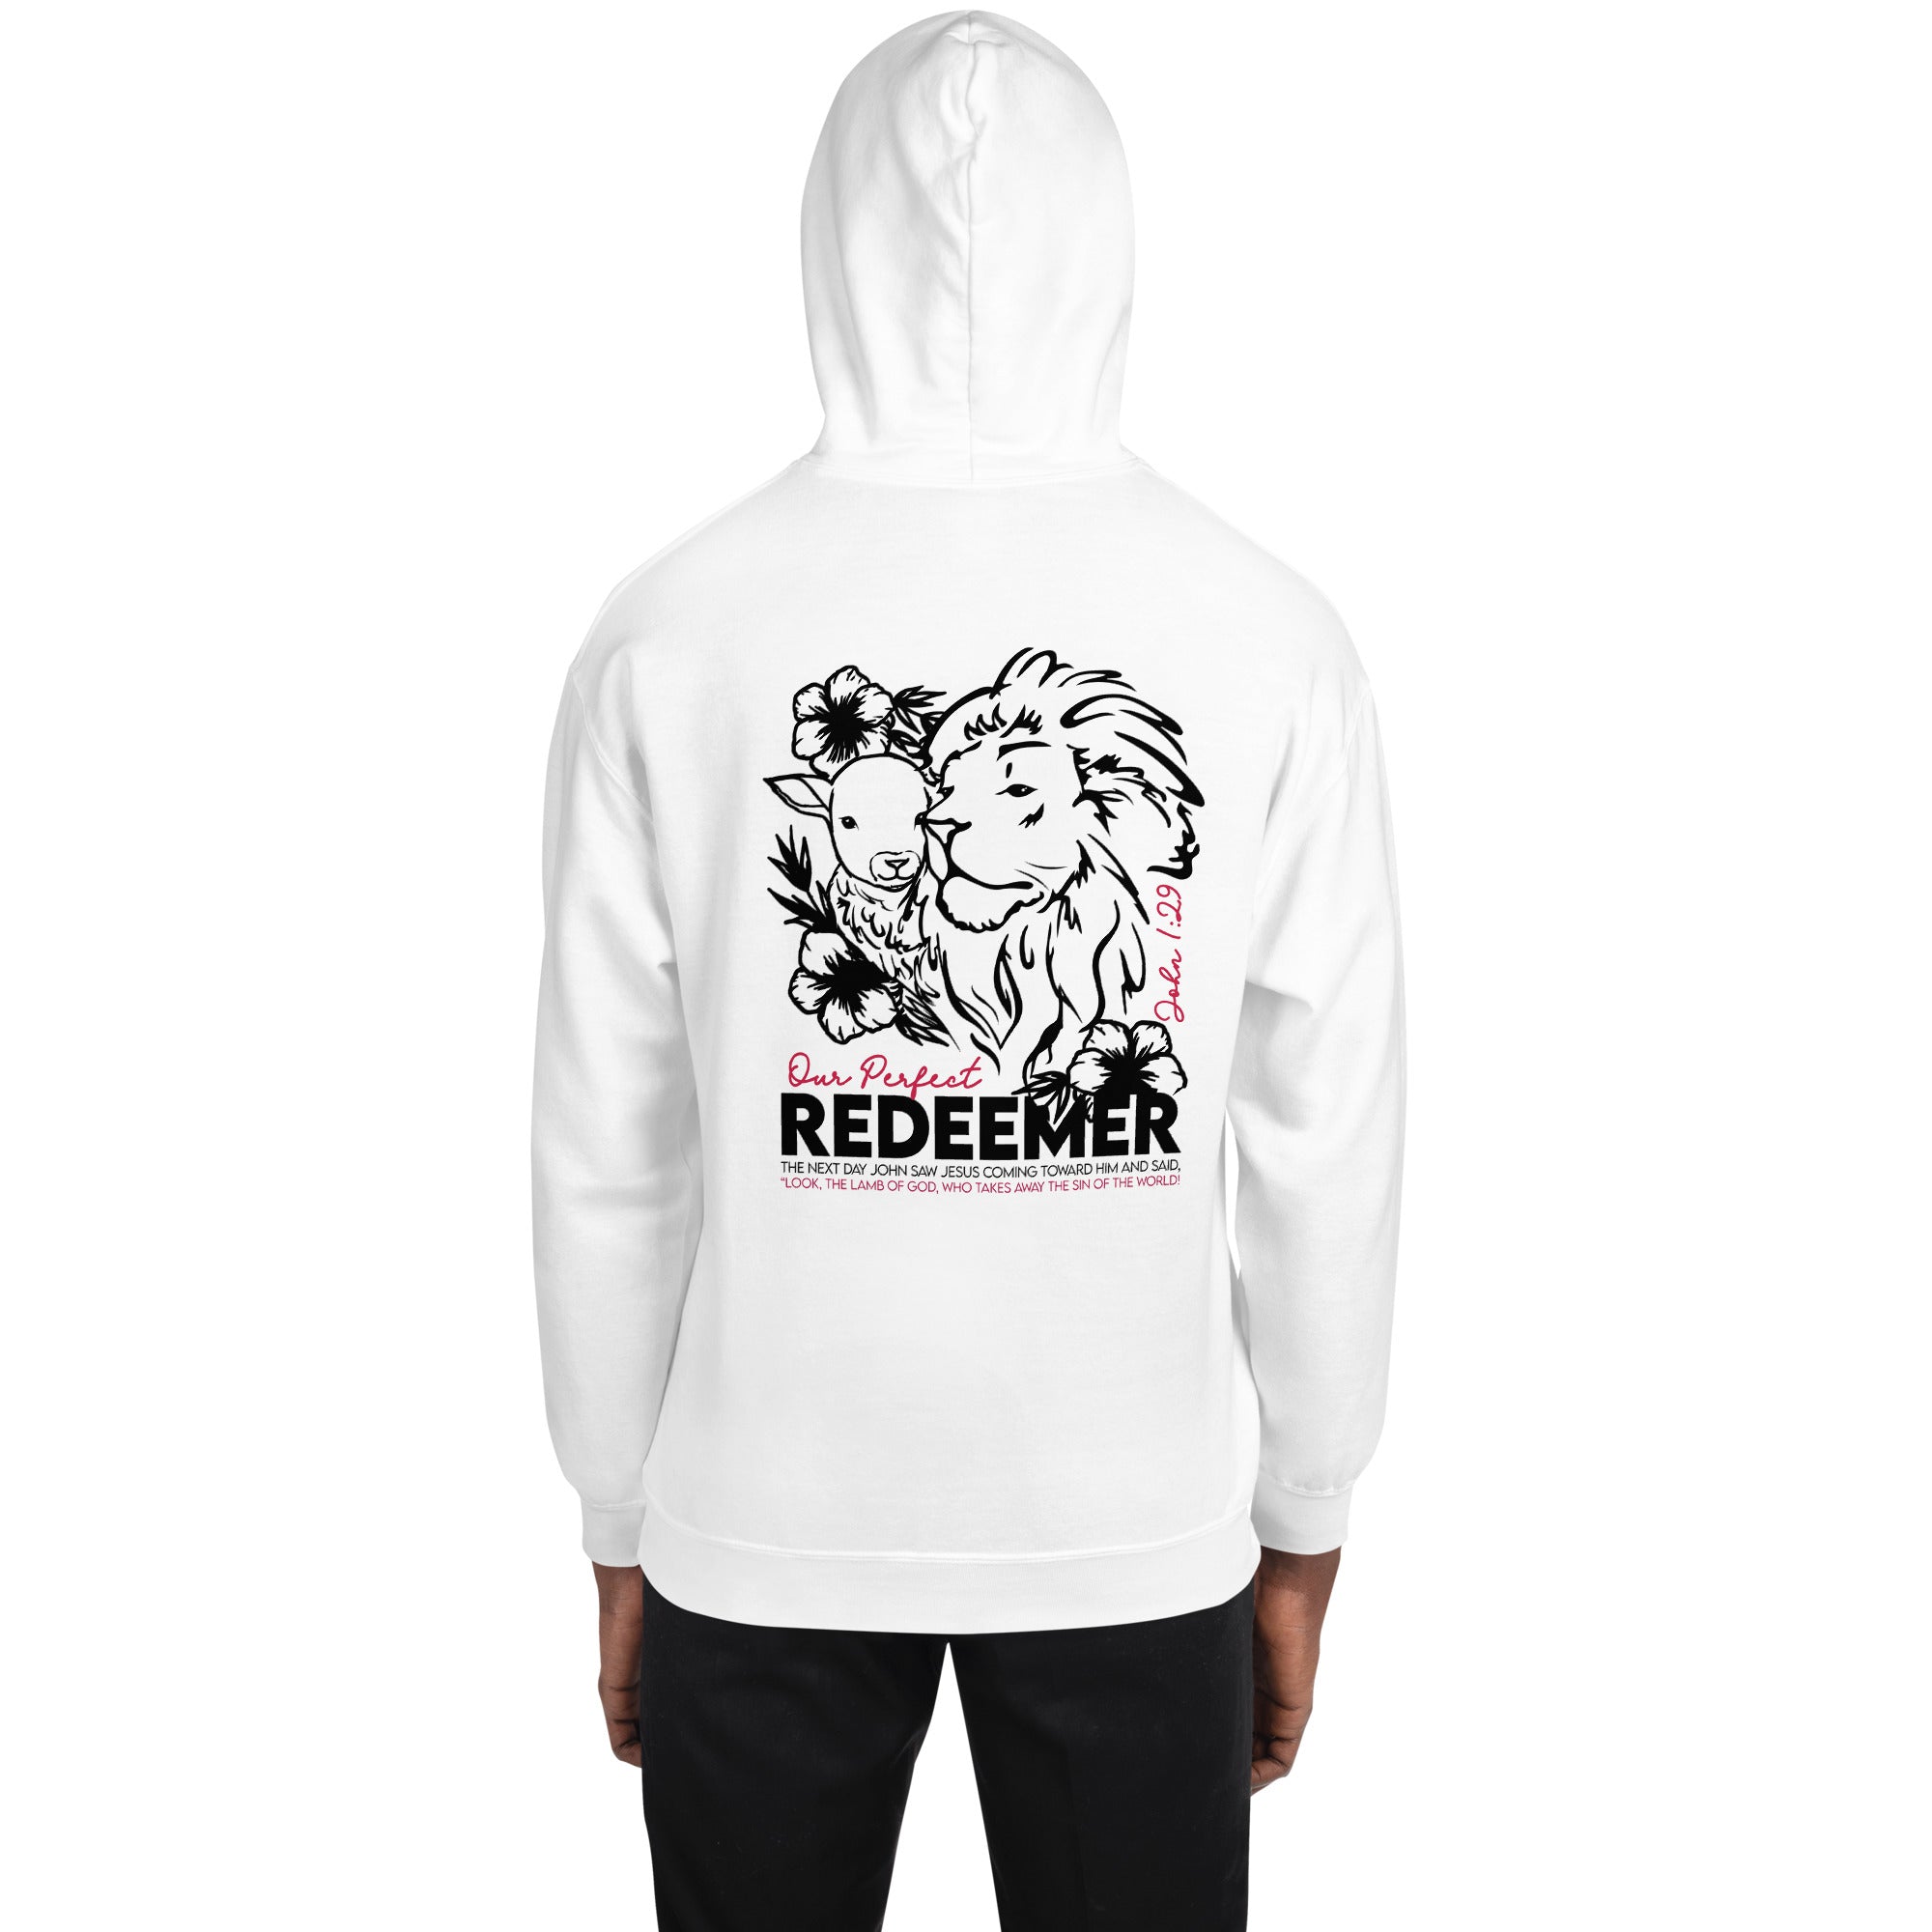 Redeemer "Light" | Unisex Hoodie | Embroidered Logo